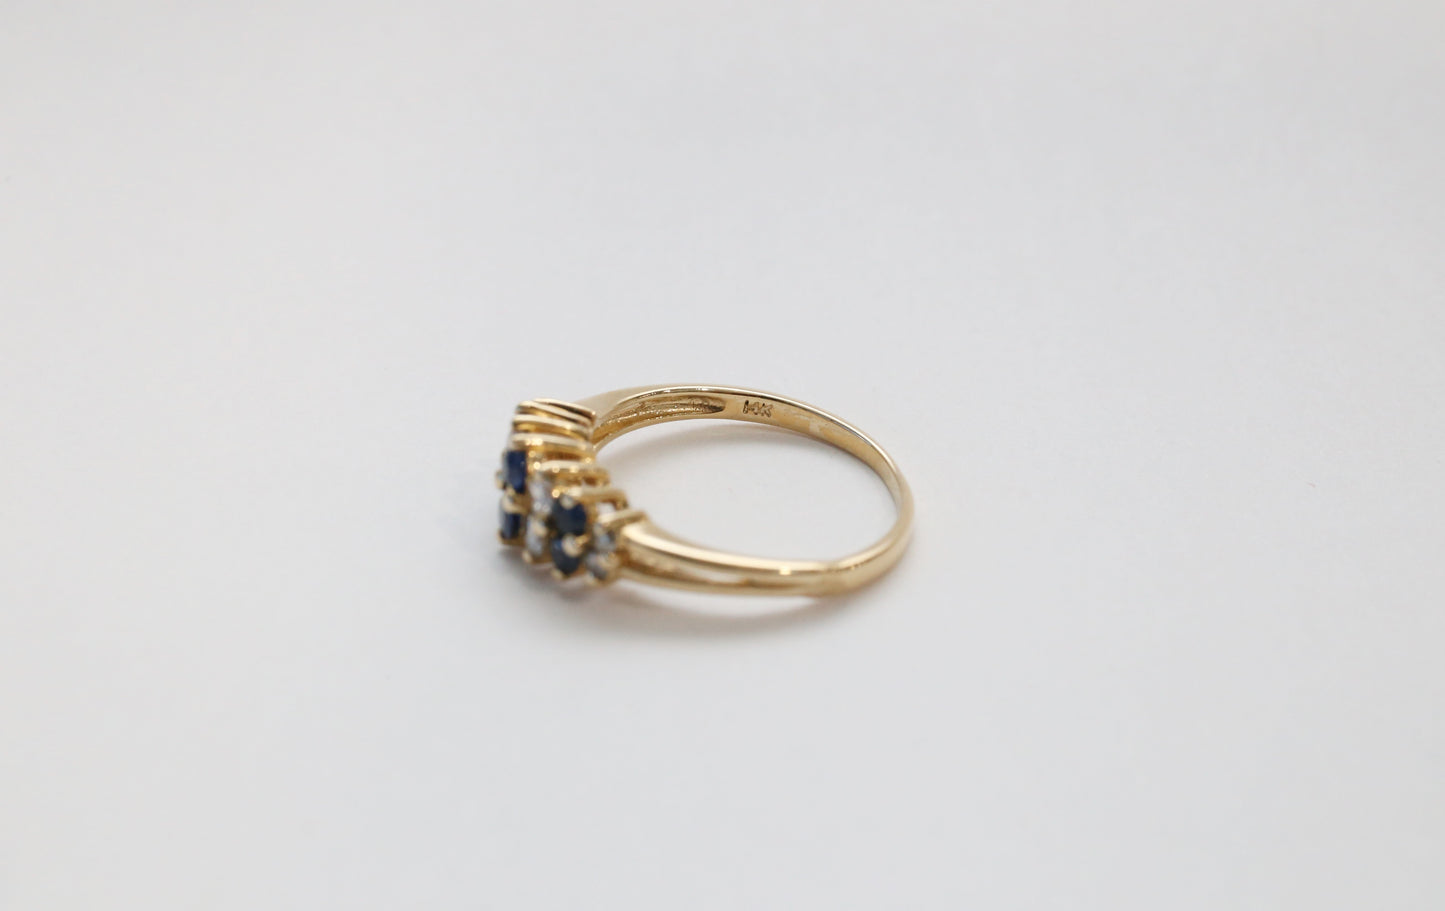 14k Yellow Gold Sapphire & Diamond Ring, Size 6.5 - 2.2g